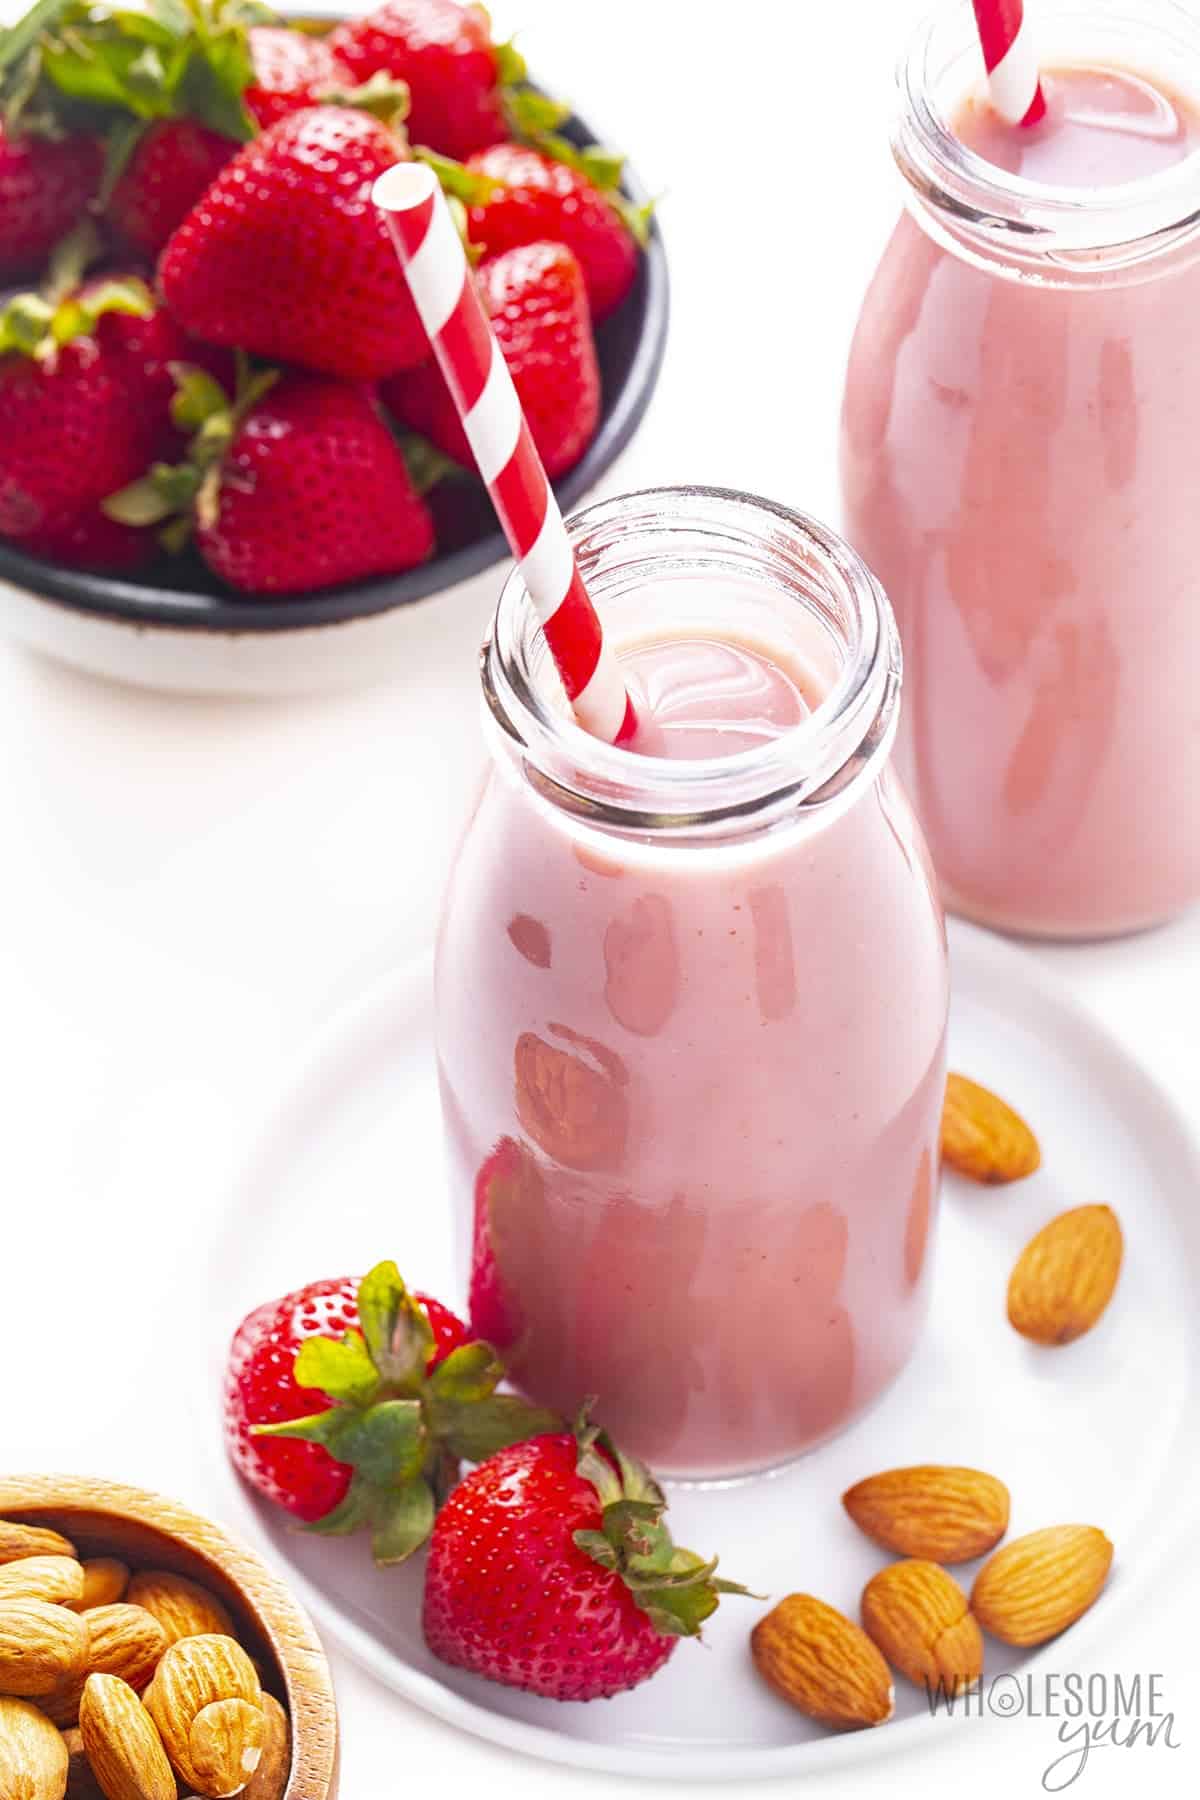 Glass bottles of strawberry almond milk next to bowl of strawberries.